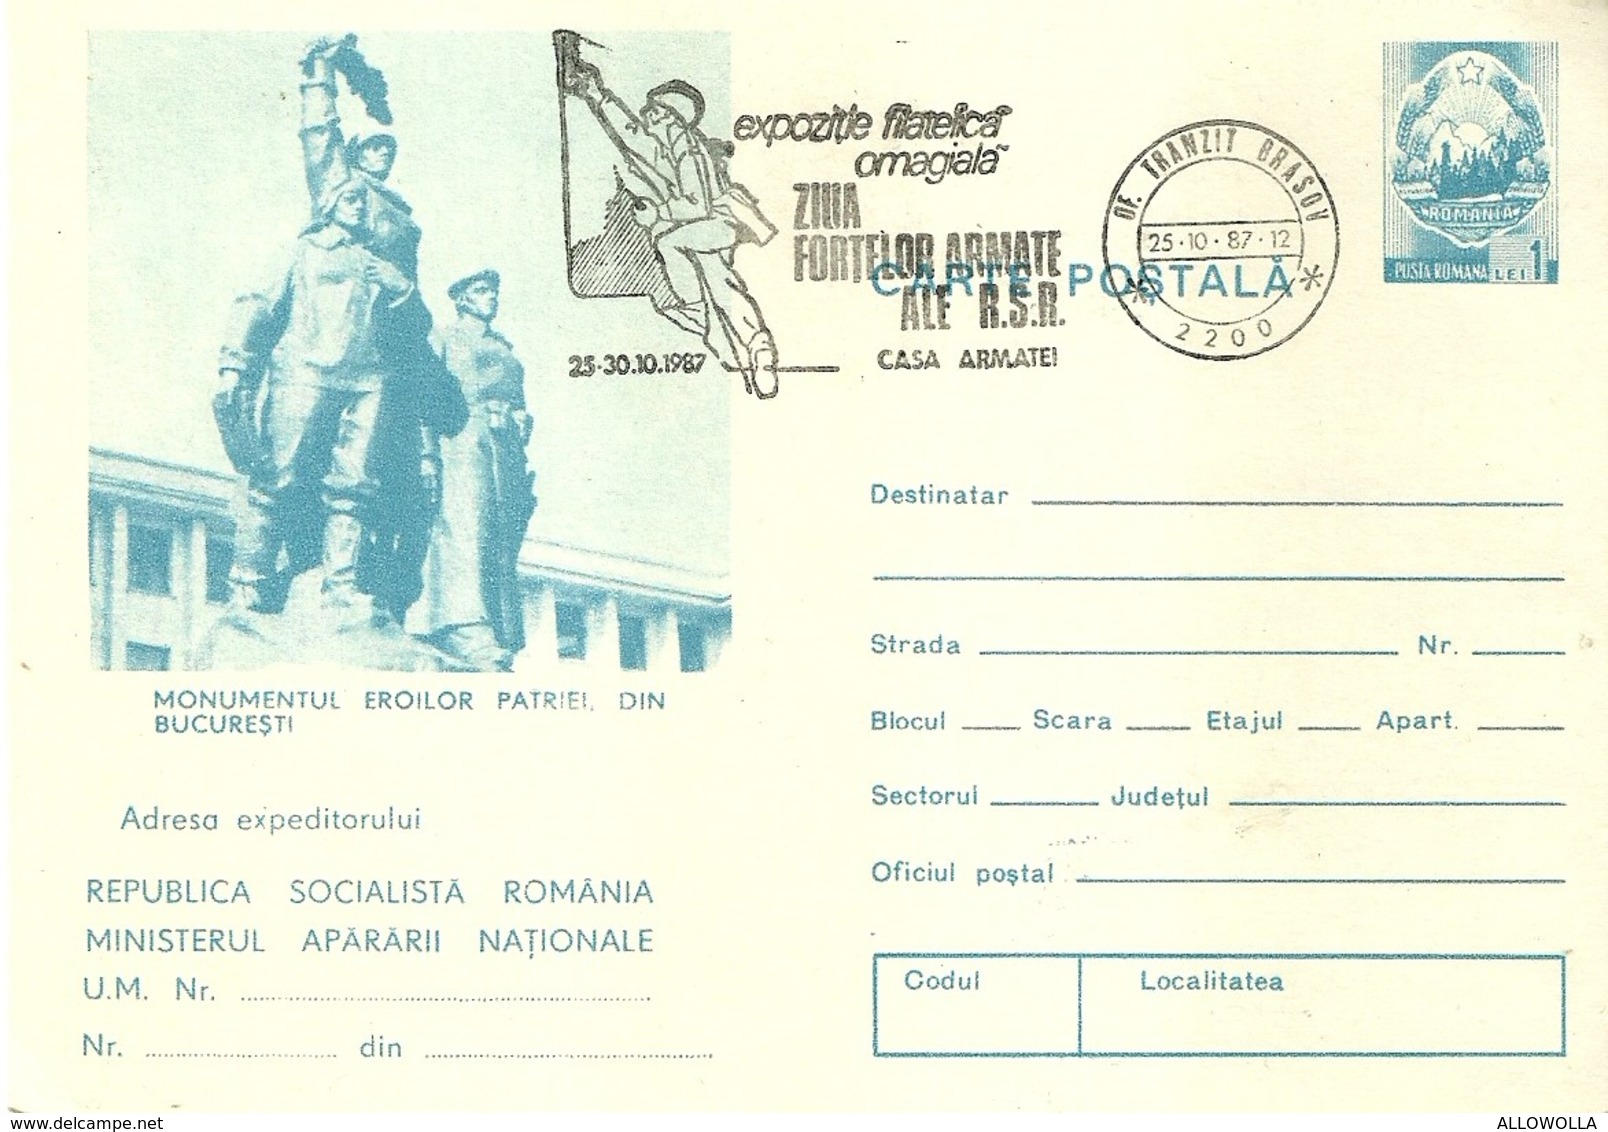 4047 " EXPOZITIE FILATELICA OMAGIALA-ZIUIA FORTELOR  ARMATE ALE R.S.R.-25/39-10-1987" CART. POST. ORIG. NON SPEDITA - Roemenië